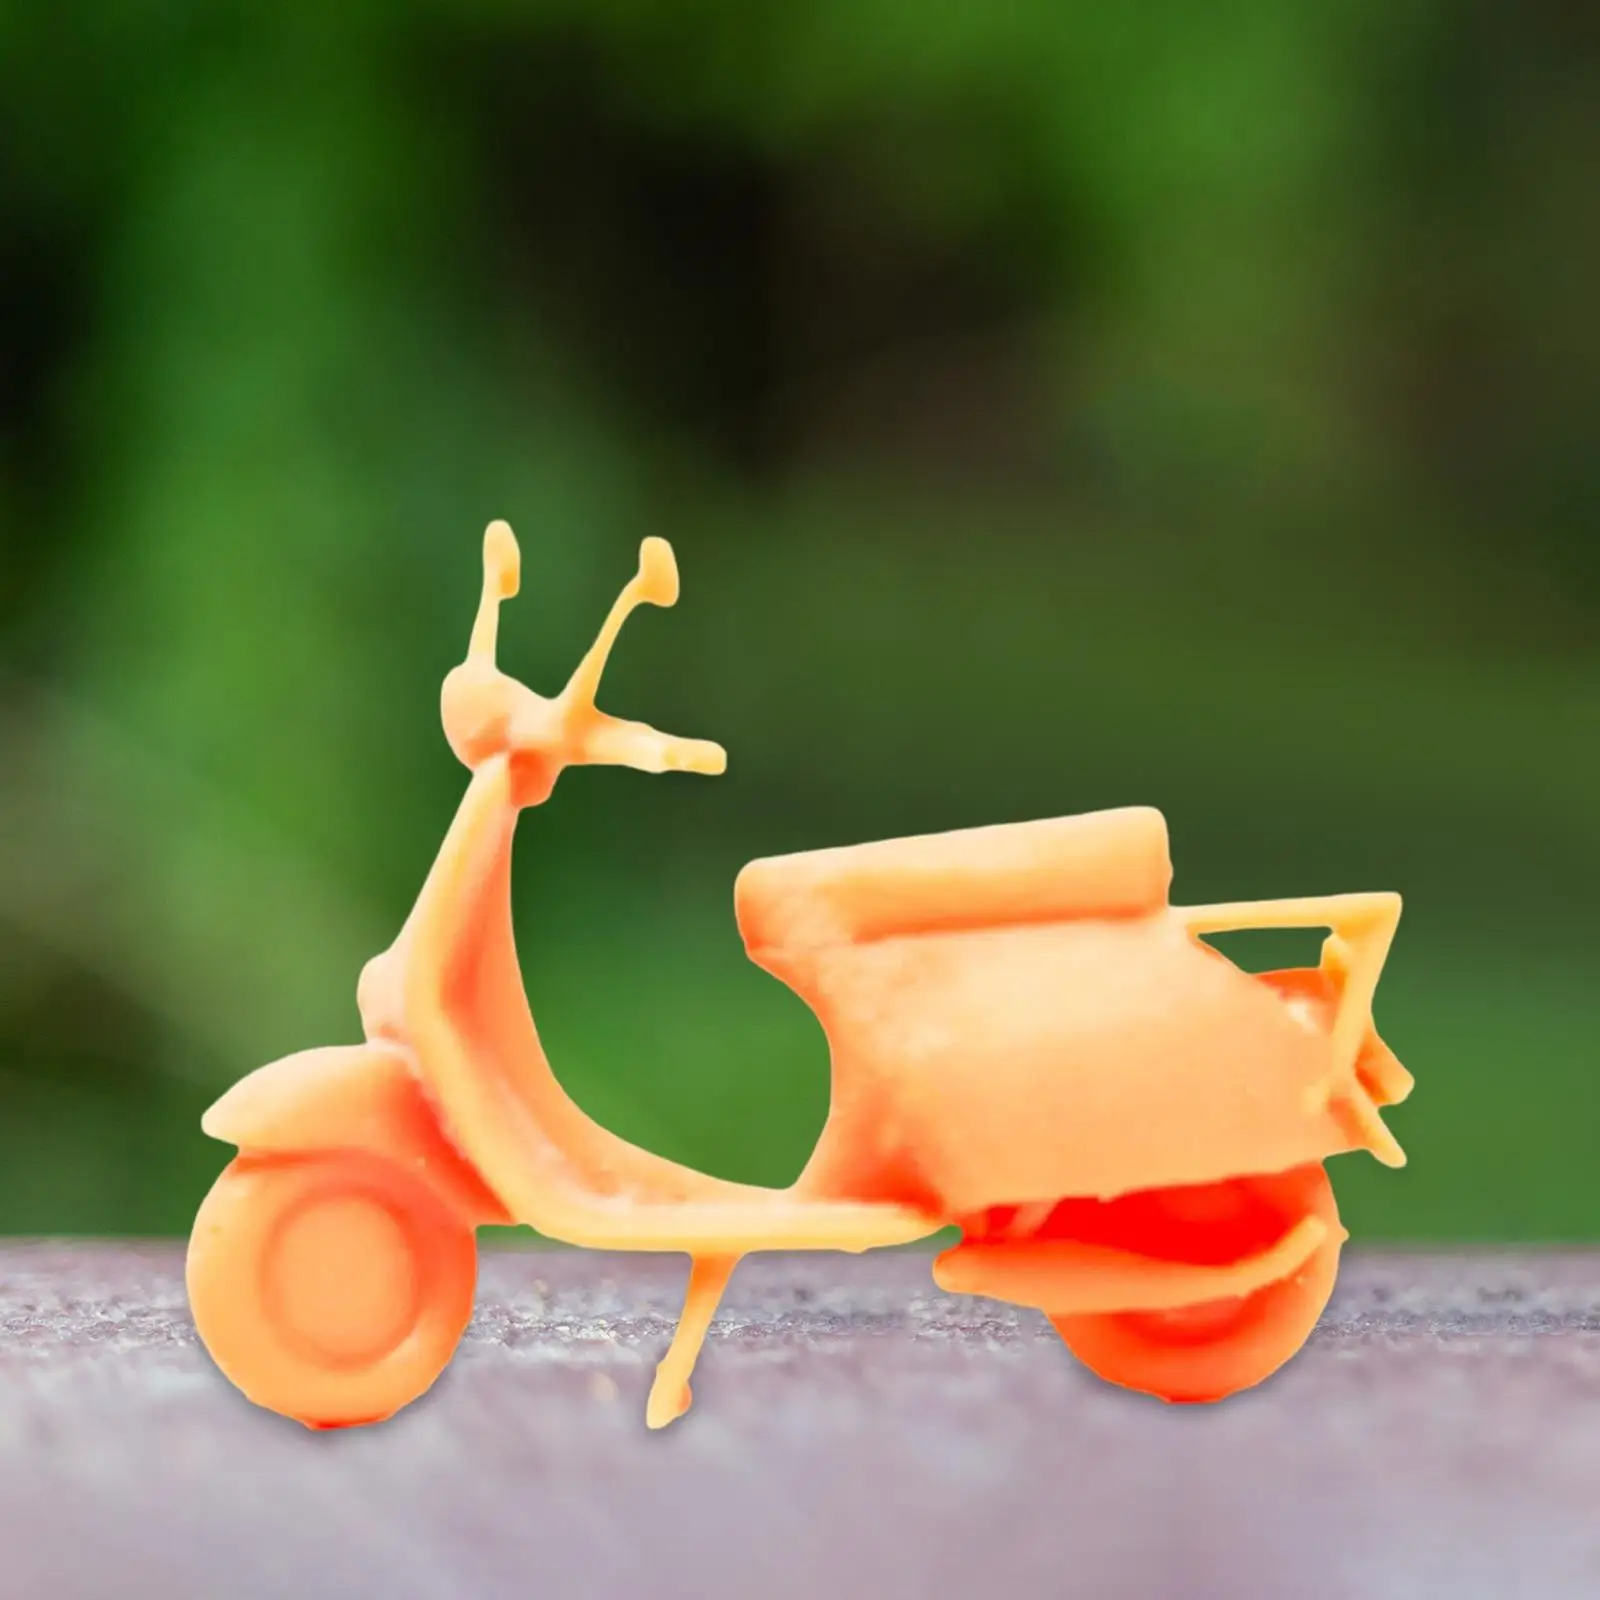 1:64 Scale Unpainted Tiny Motorcycle Layout Movie Props S Gauge Desktop Ornament Fairy Garden Miniature Scenes Resin Model Decor